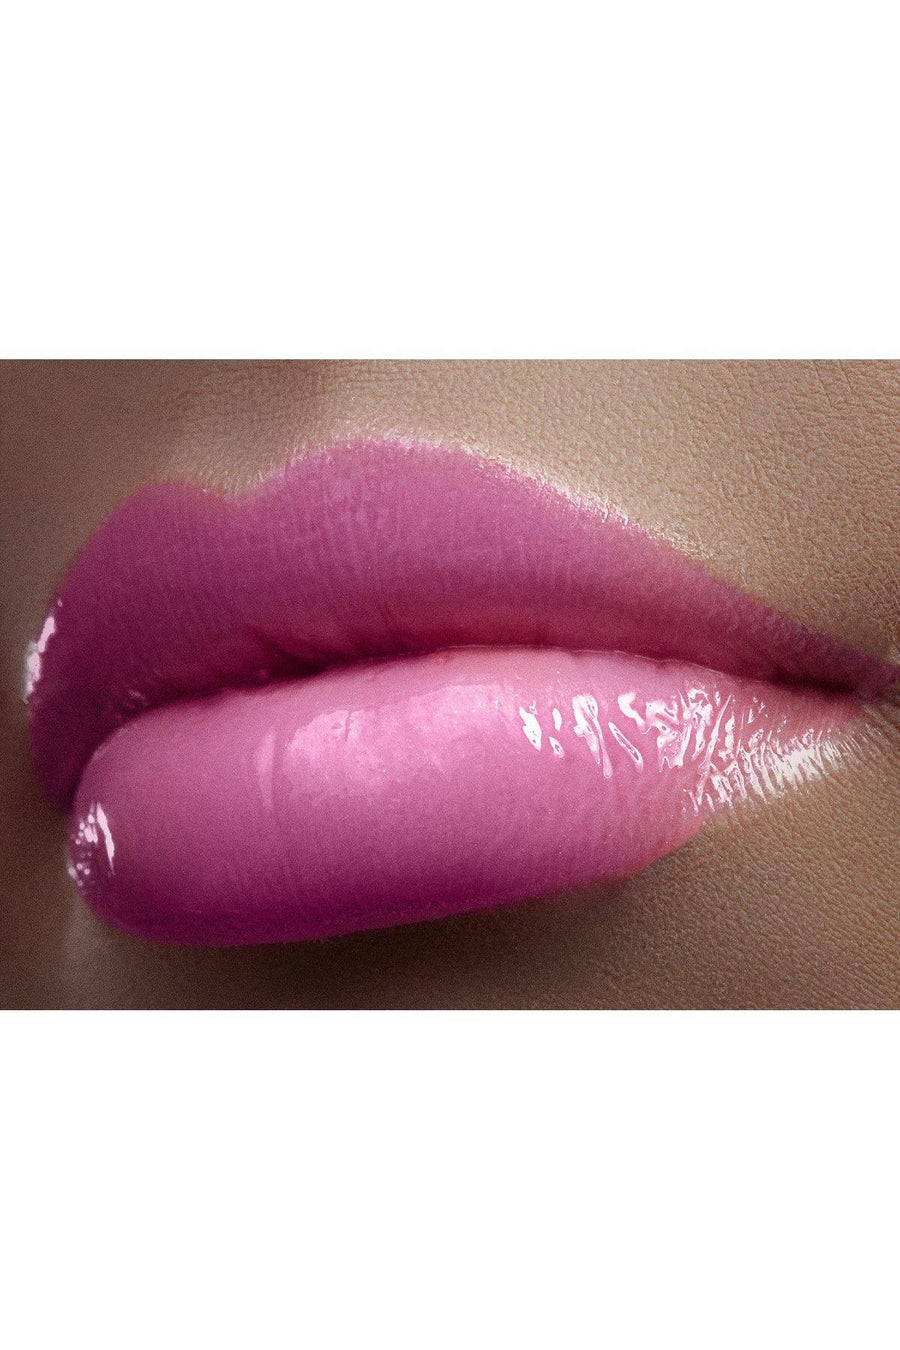 Lip Gloss #10 - Sugar Violet - Blend Mineral Cosmetics